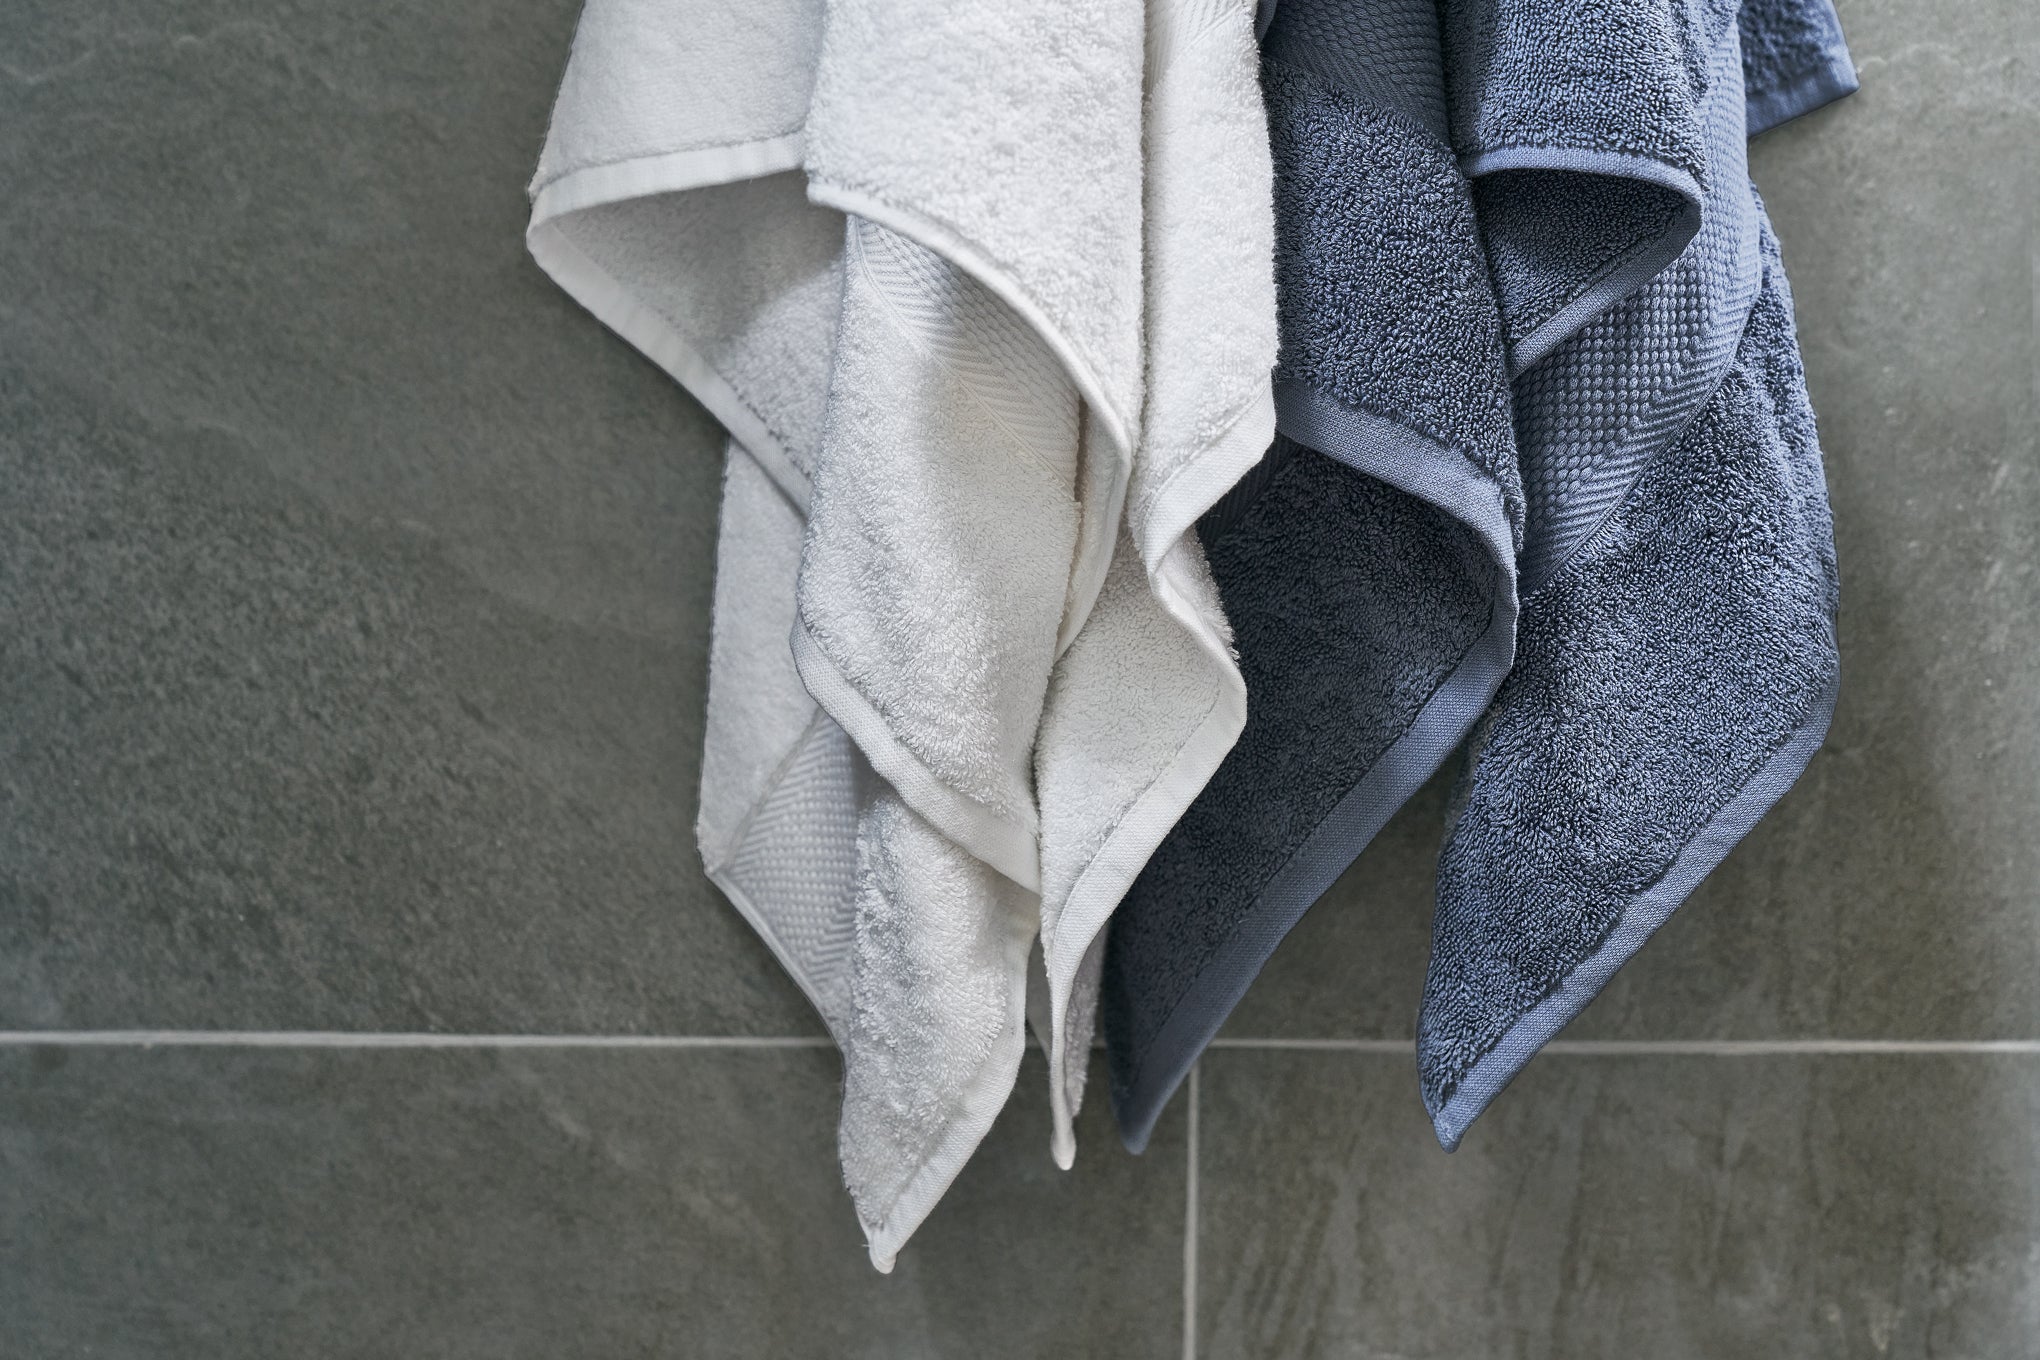 Organic Cotton Luxuriously Plush Bath Towel 20 Piece Set, GOTS & OEKO-TEX  Certified